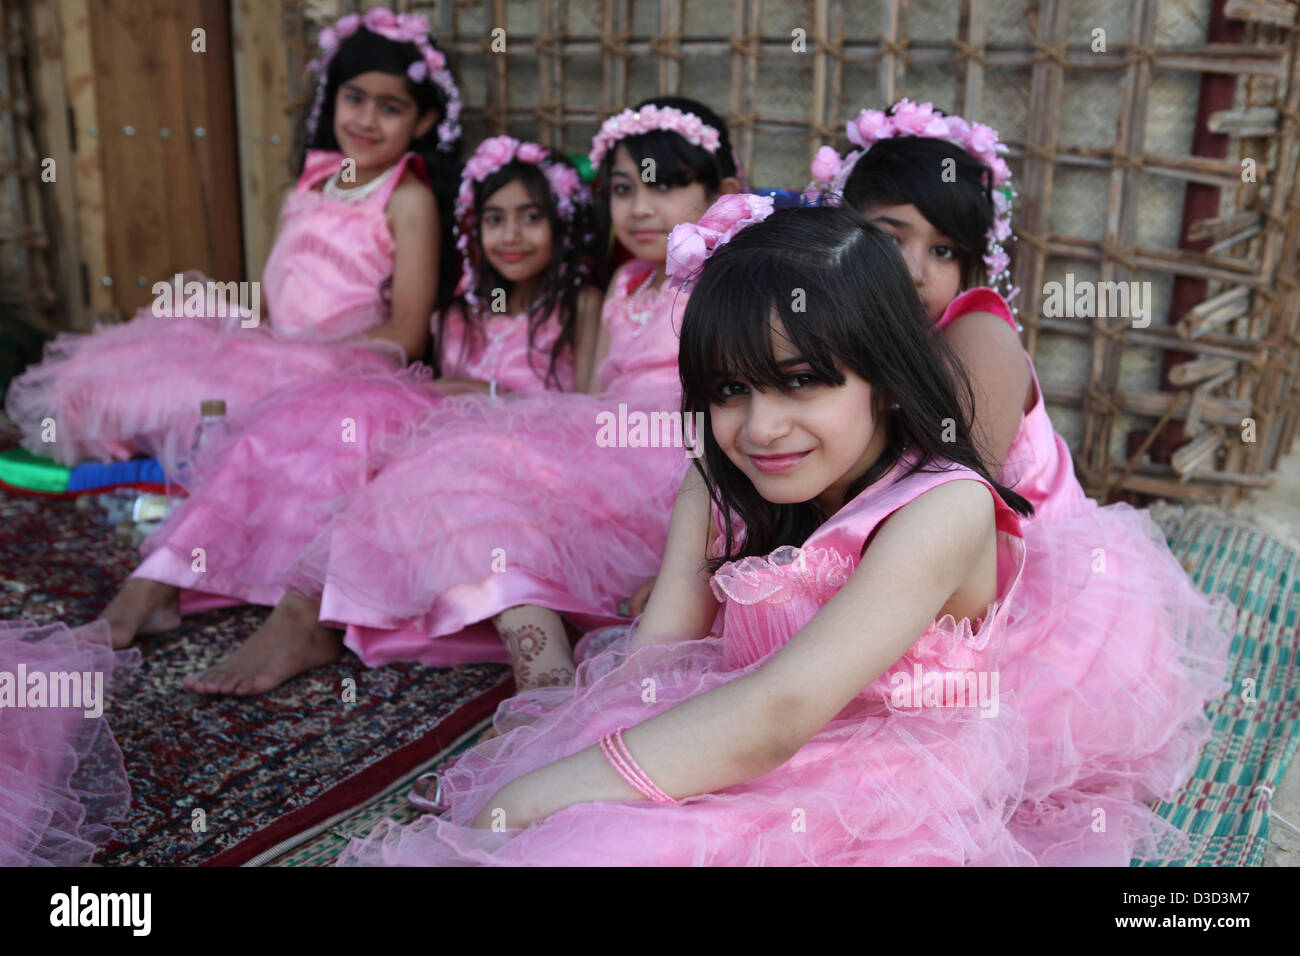 Dubai, United Arab Emirates, girls in pink dresses sitting on the floor Stock Photo